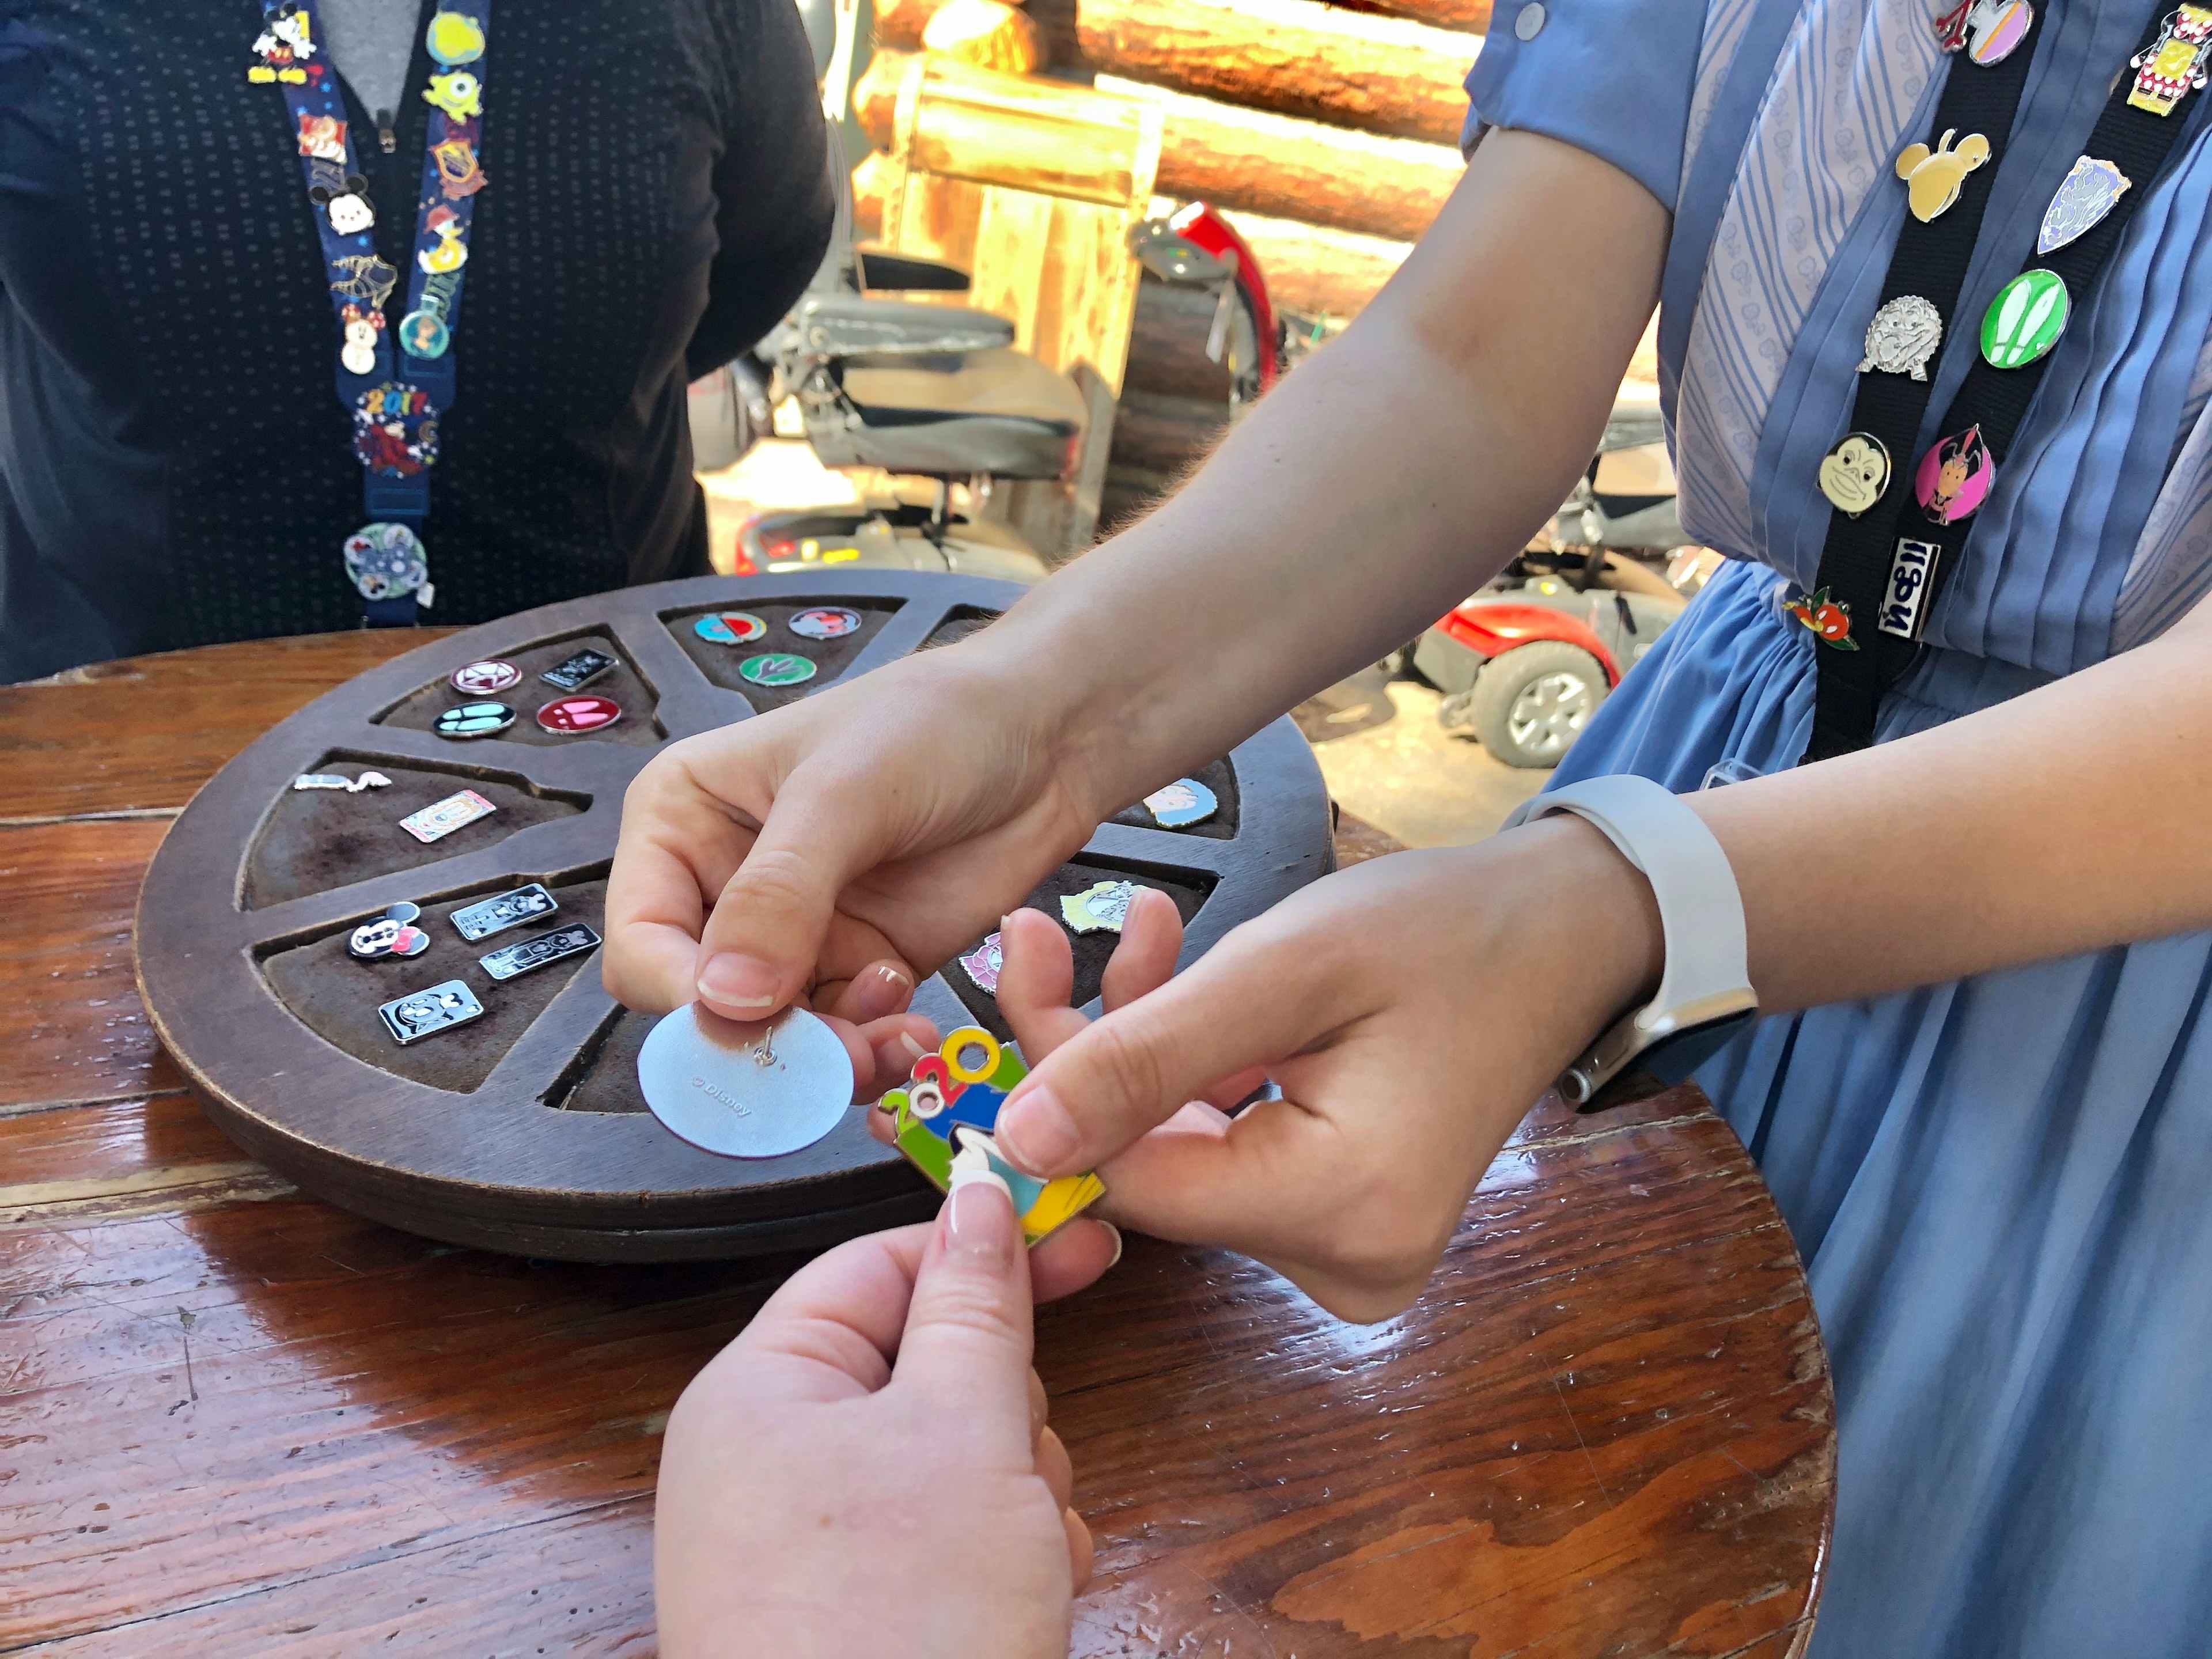 Pins are traded at Disneyland.